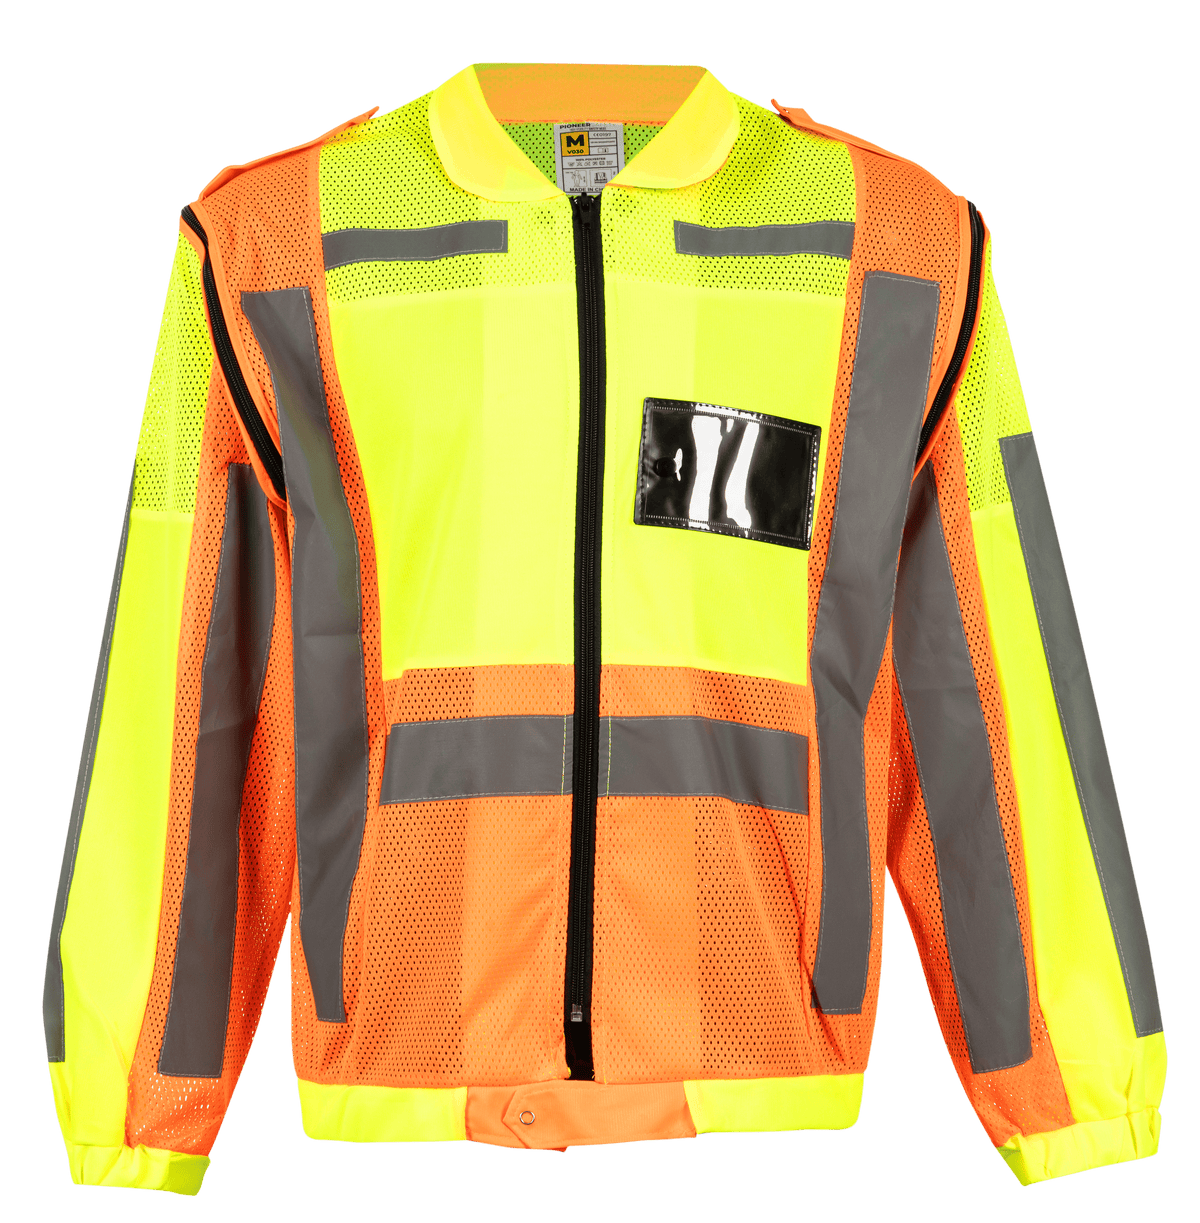 Reflective Jacket - Detachable Sleeves